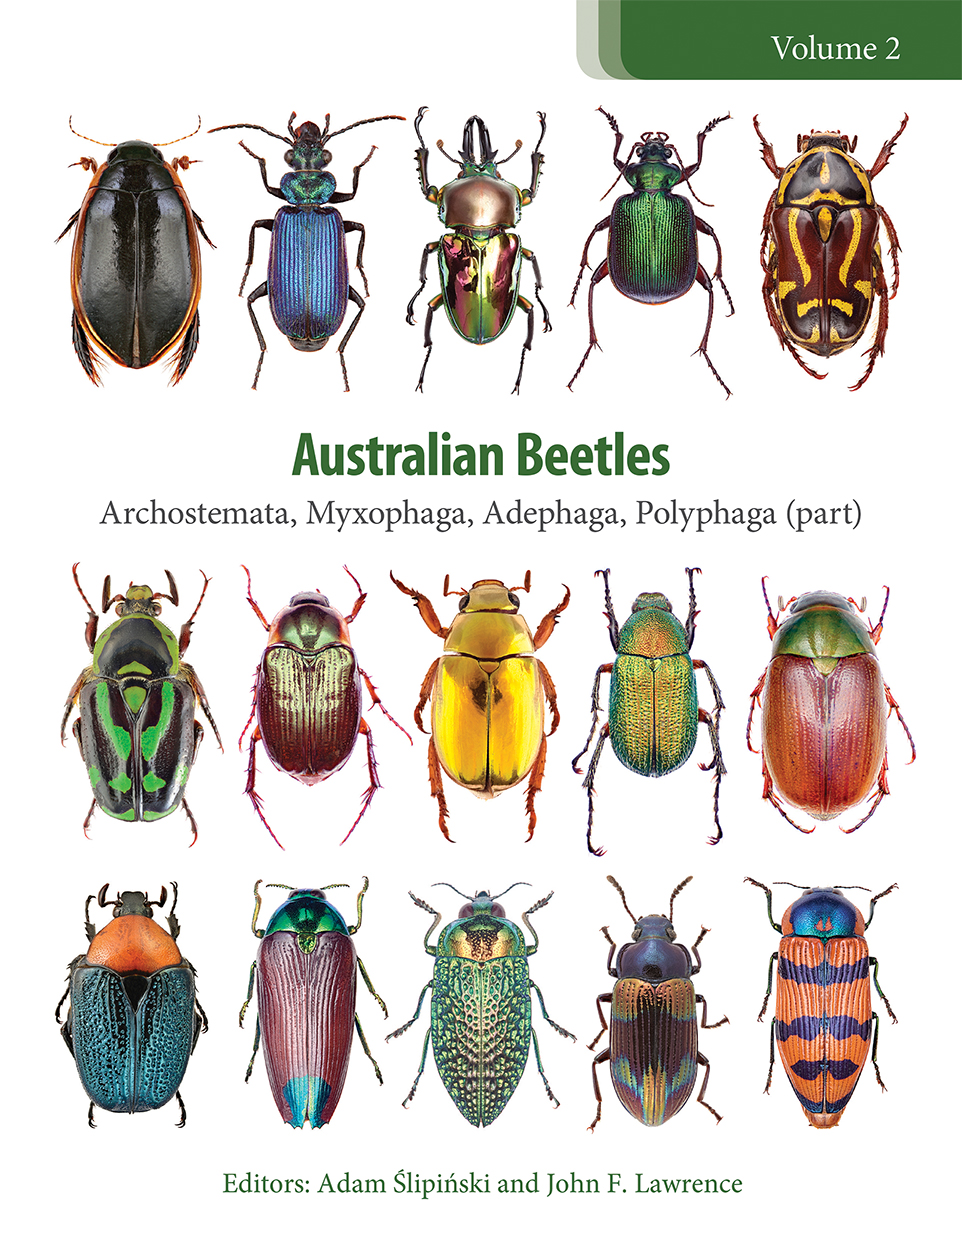 The cover image of Australian Beetles Volume 2, featuring 15 beetles of va